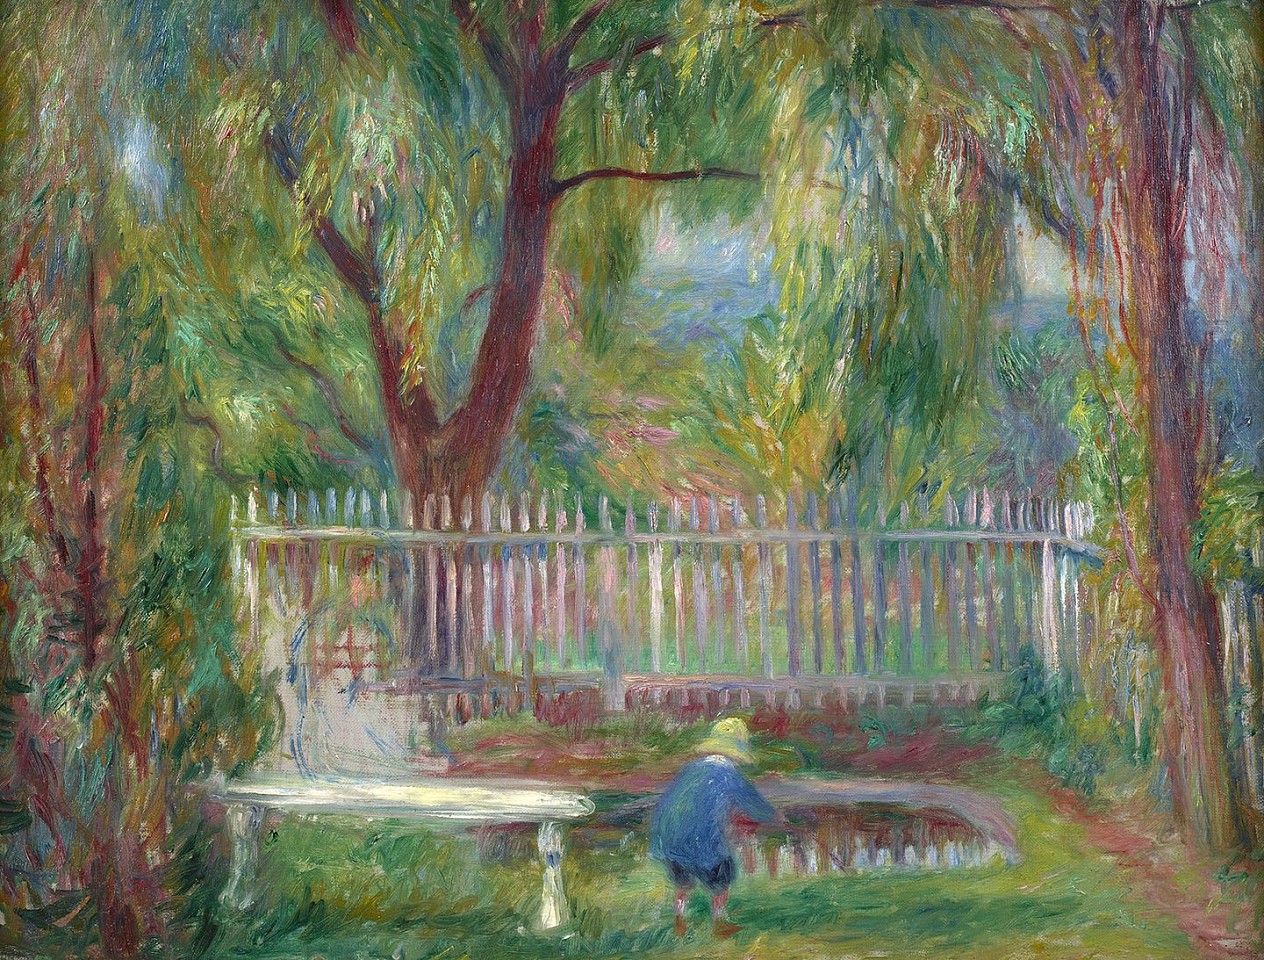 William Glackens, Irene's Garden, 1917
oil on canvas, 18 x 24 in. (45.7 x 61 cm)
WG230601